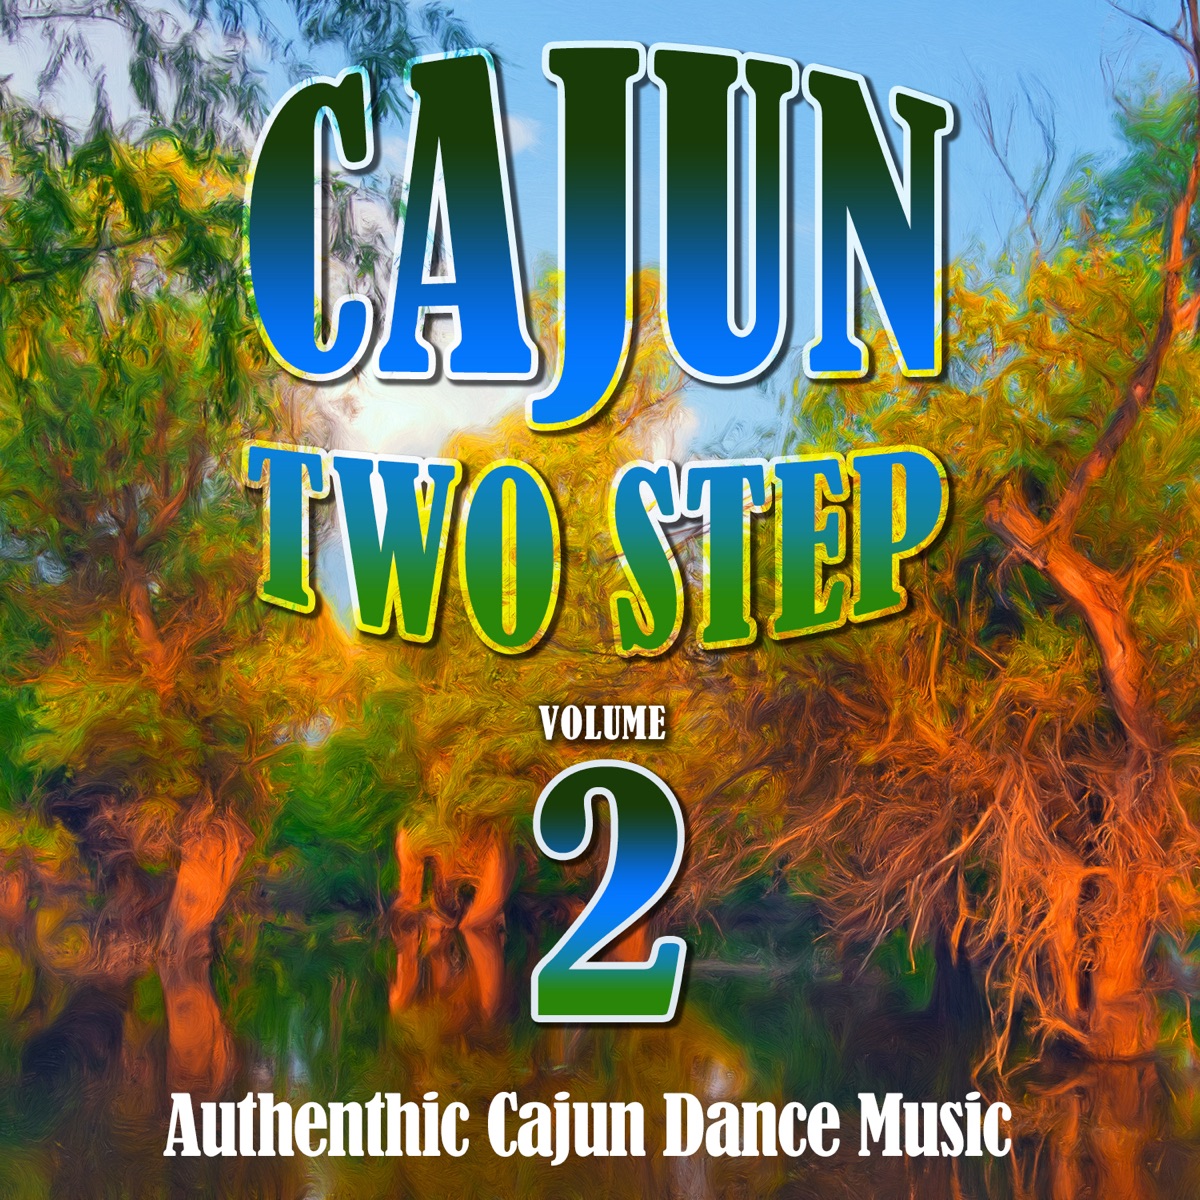 Cajun Two Step, Vol. 2 - Album by Various Artists - Apple Music